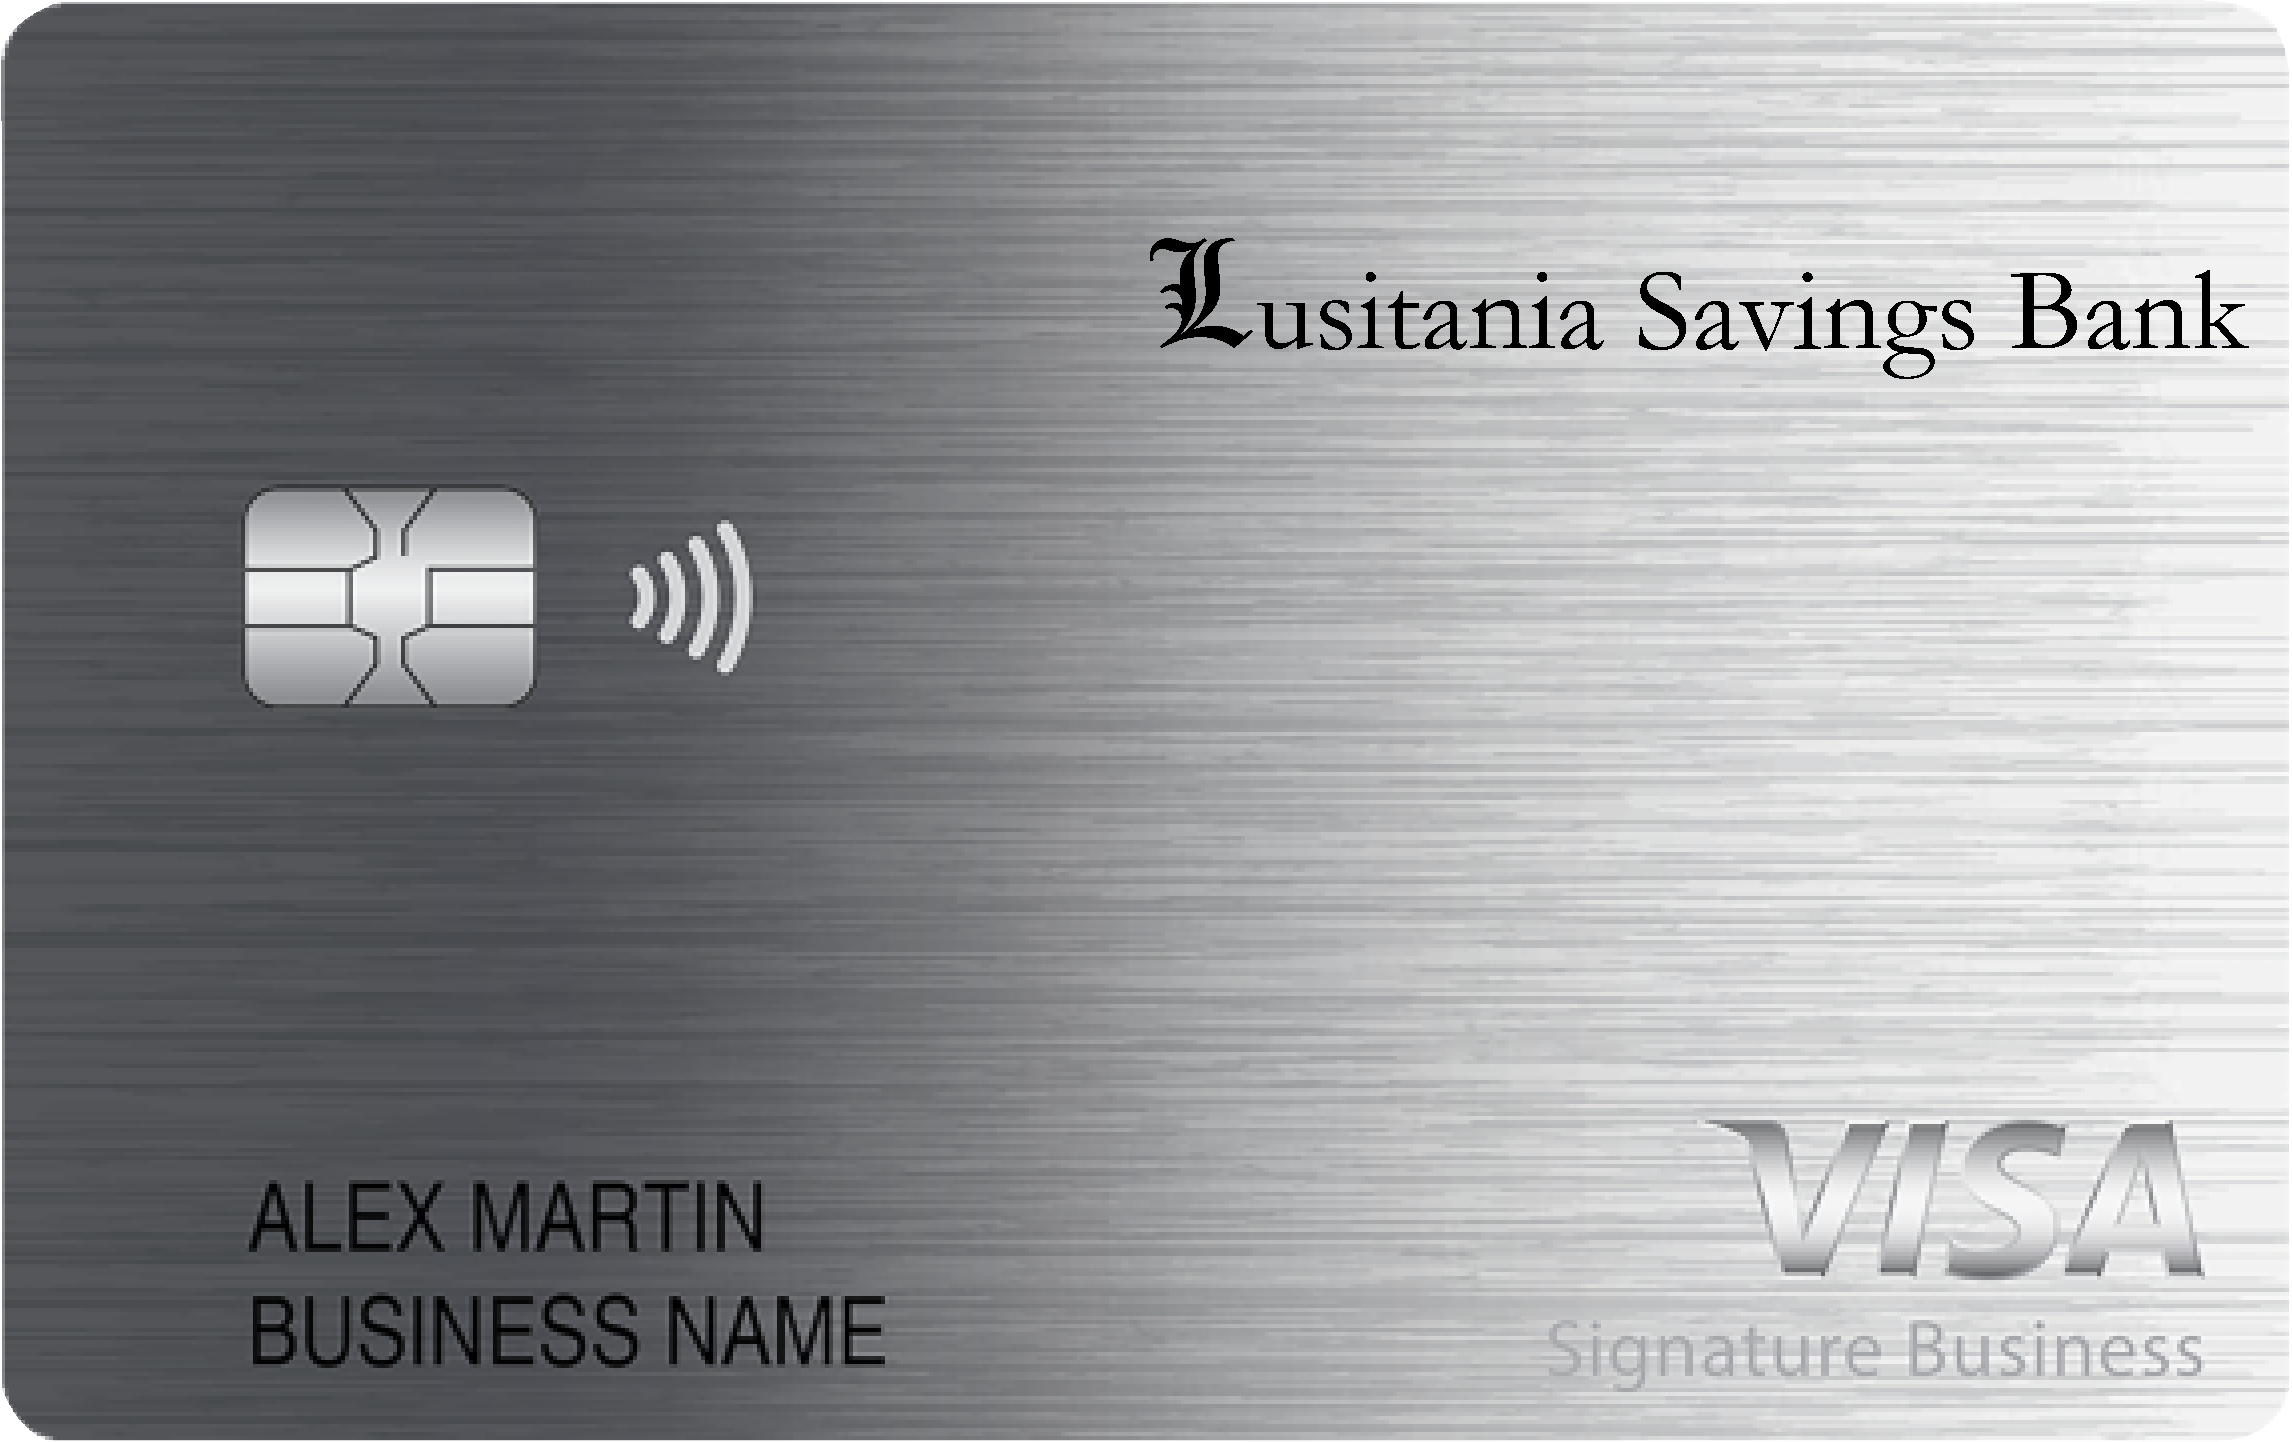 Lusitania Savings Bank